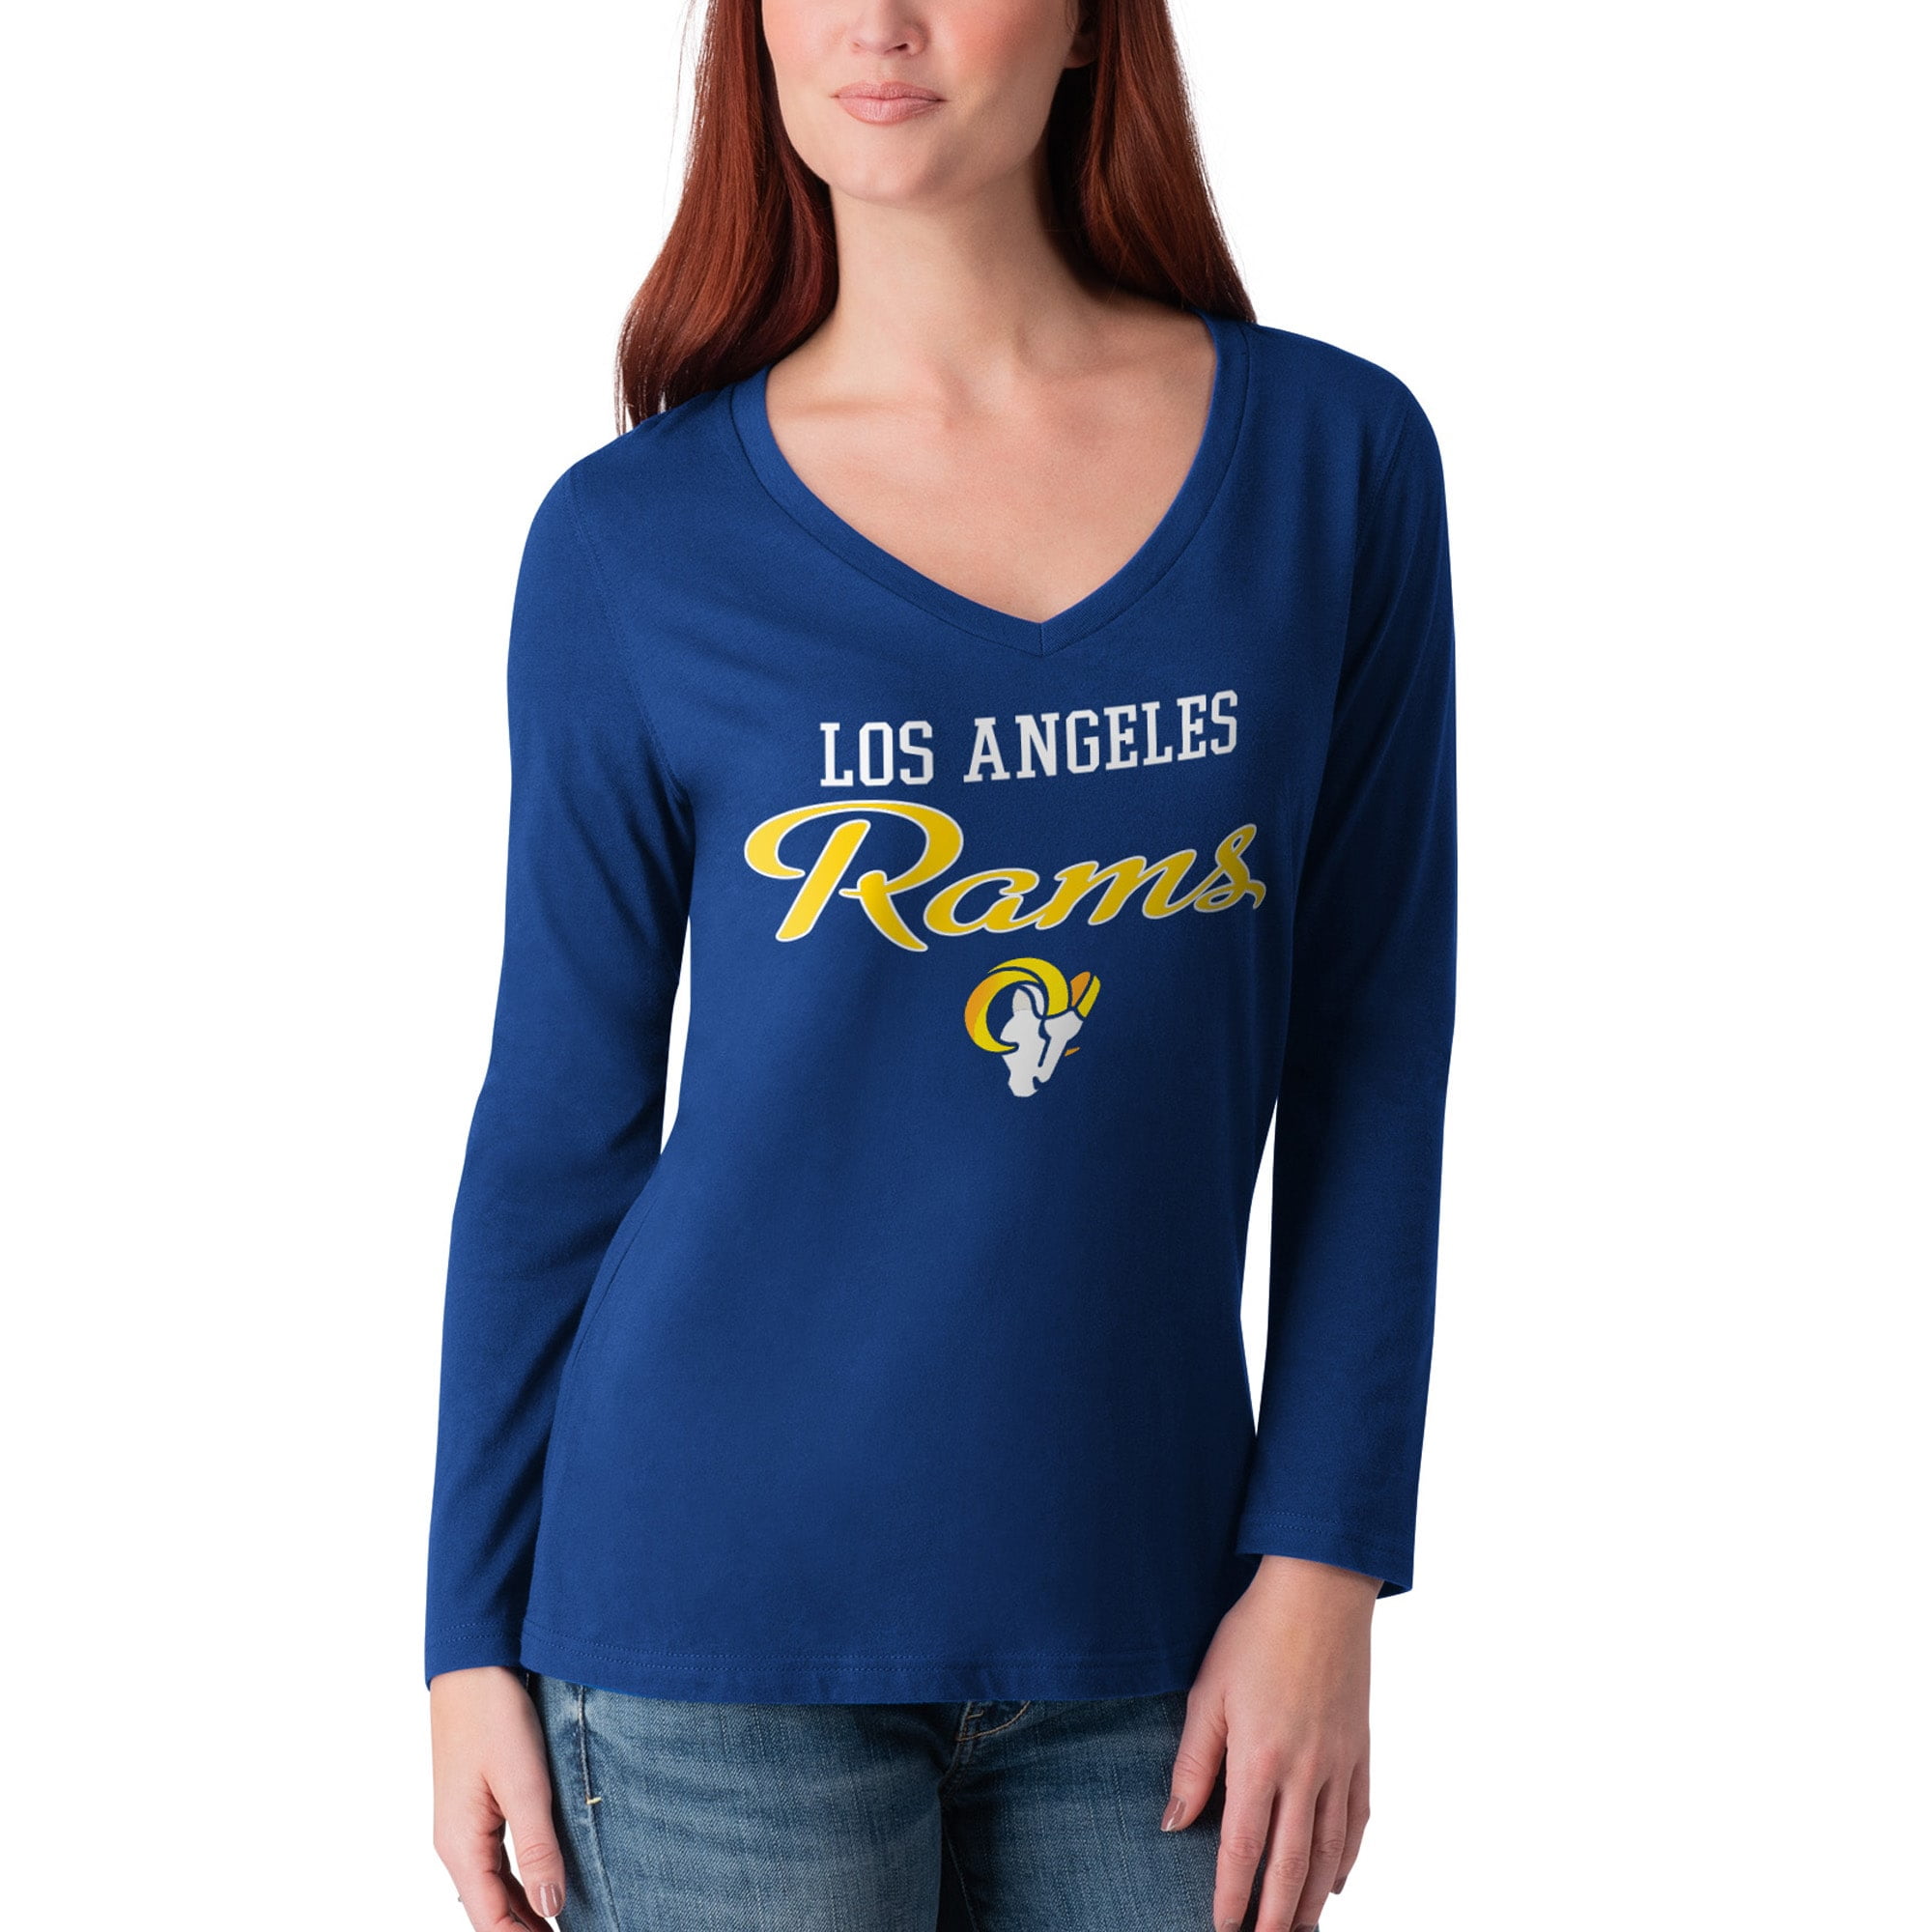 I Love Heart Rams Ladies T-Shirt 